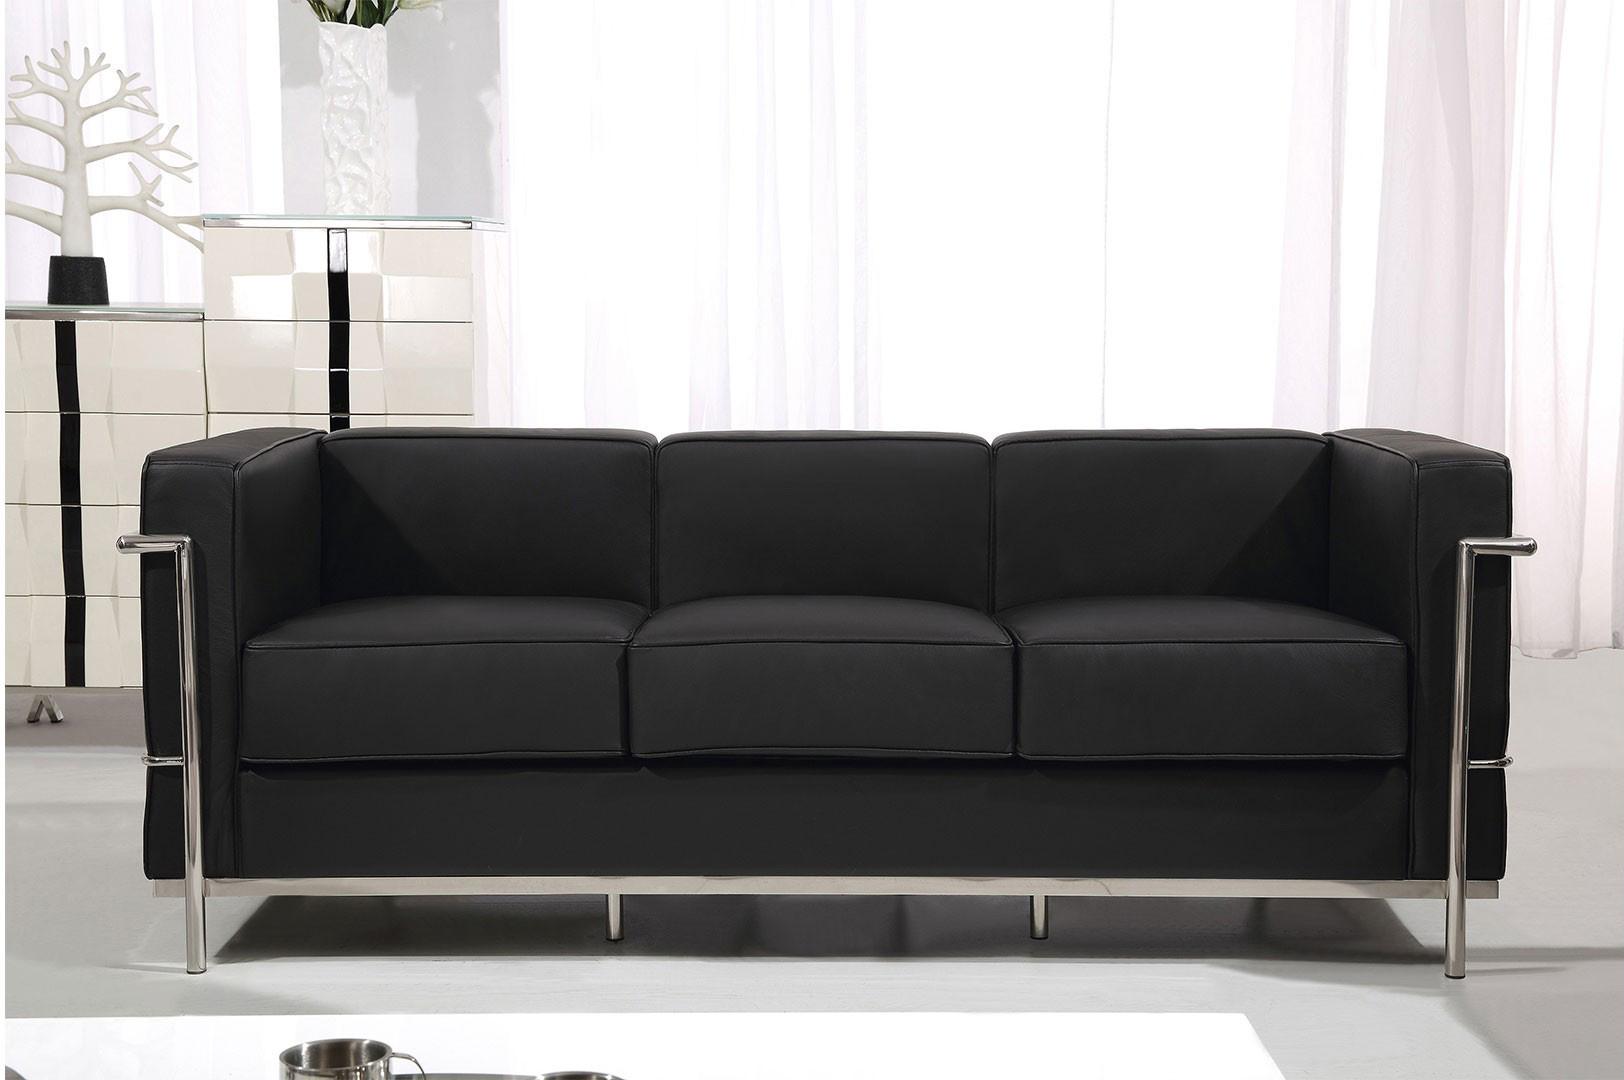 

    
At Home USA Nube Black Leather Living Room Sofa Set 3Pcs Contemporary Modern
